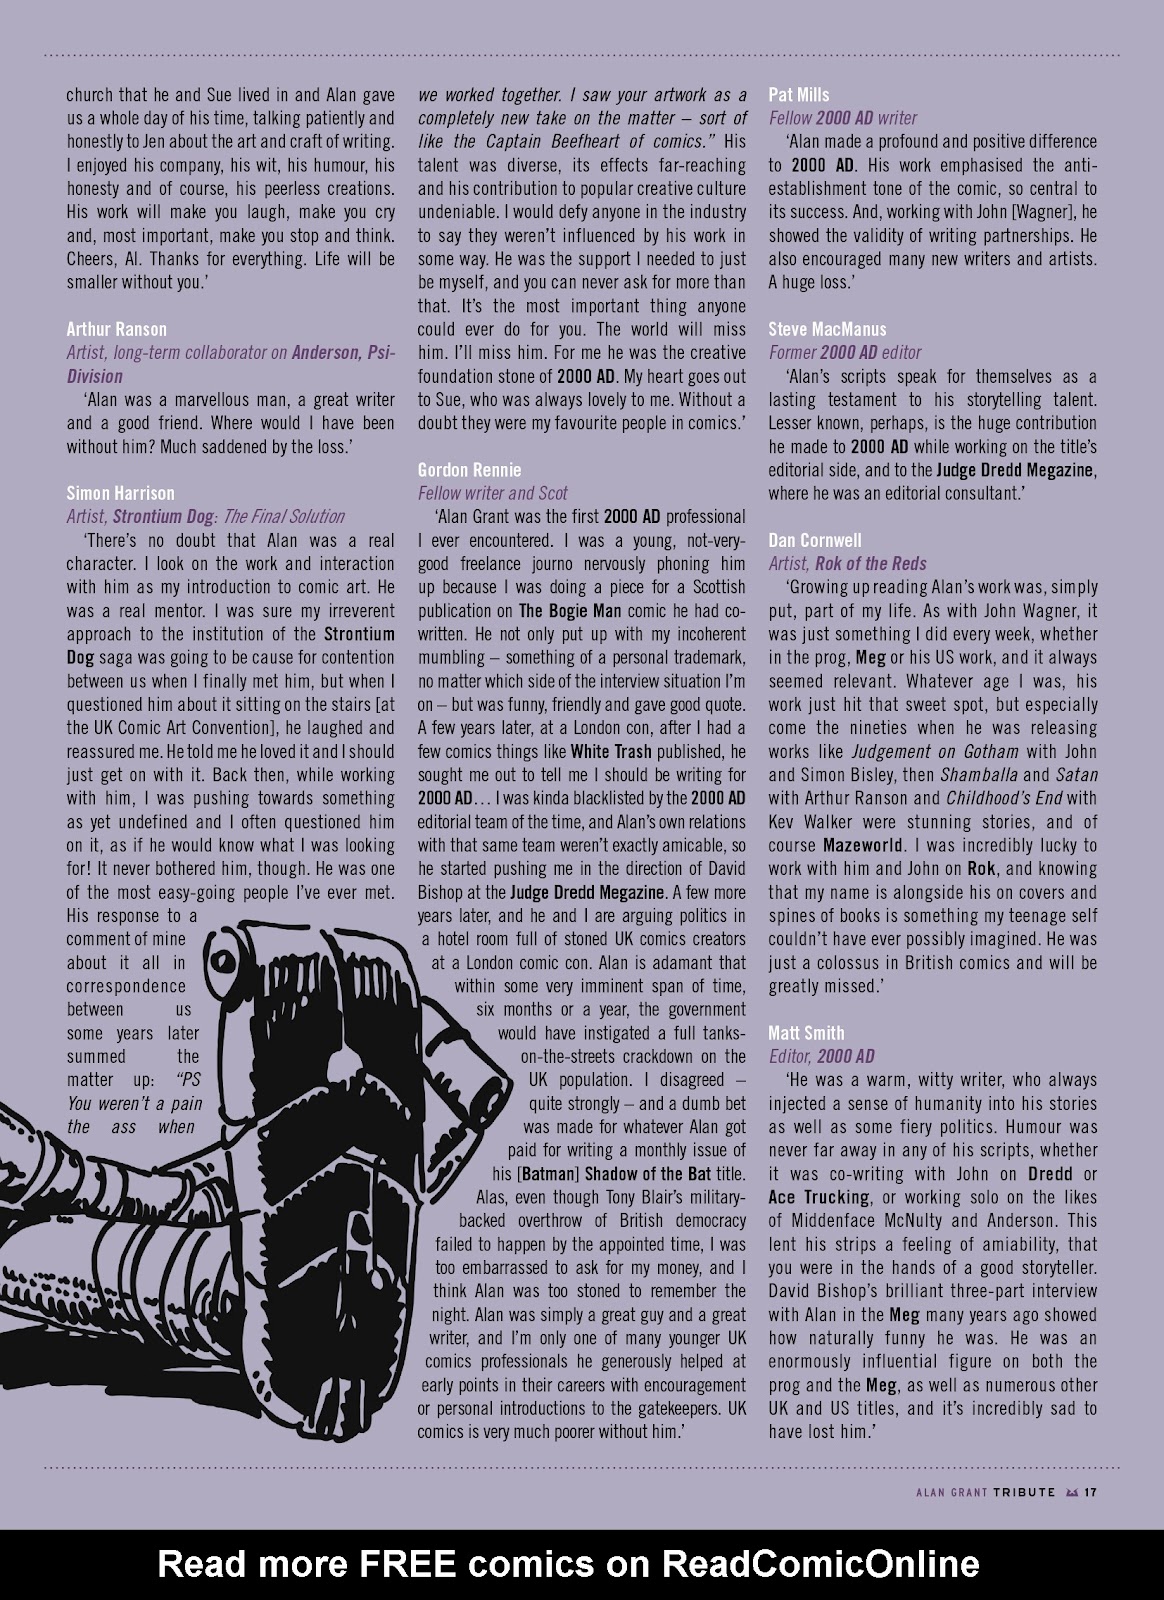 Judge Dredd Megazine (Vol. 5) issue 447 - Page 17